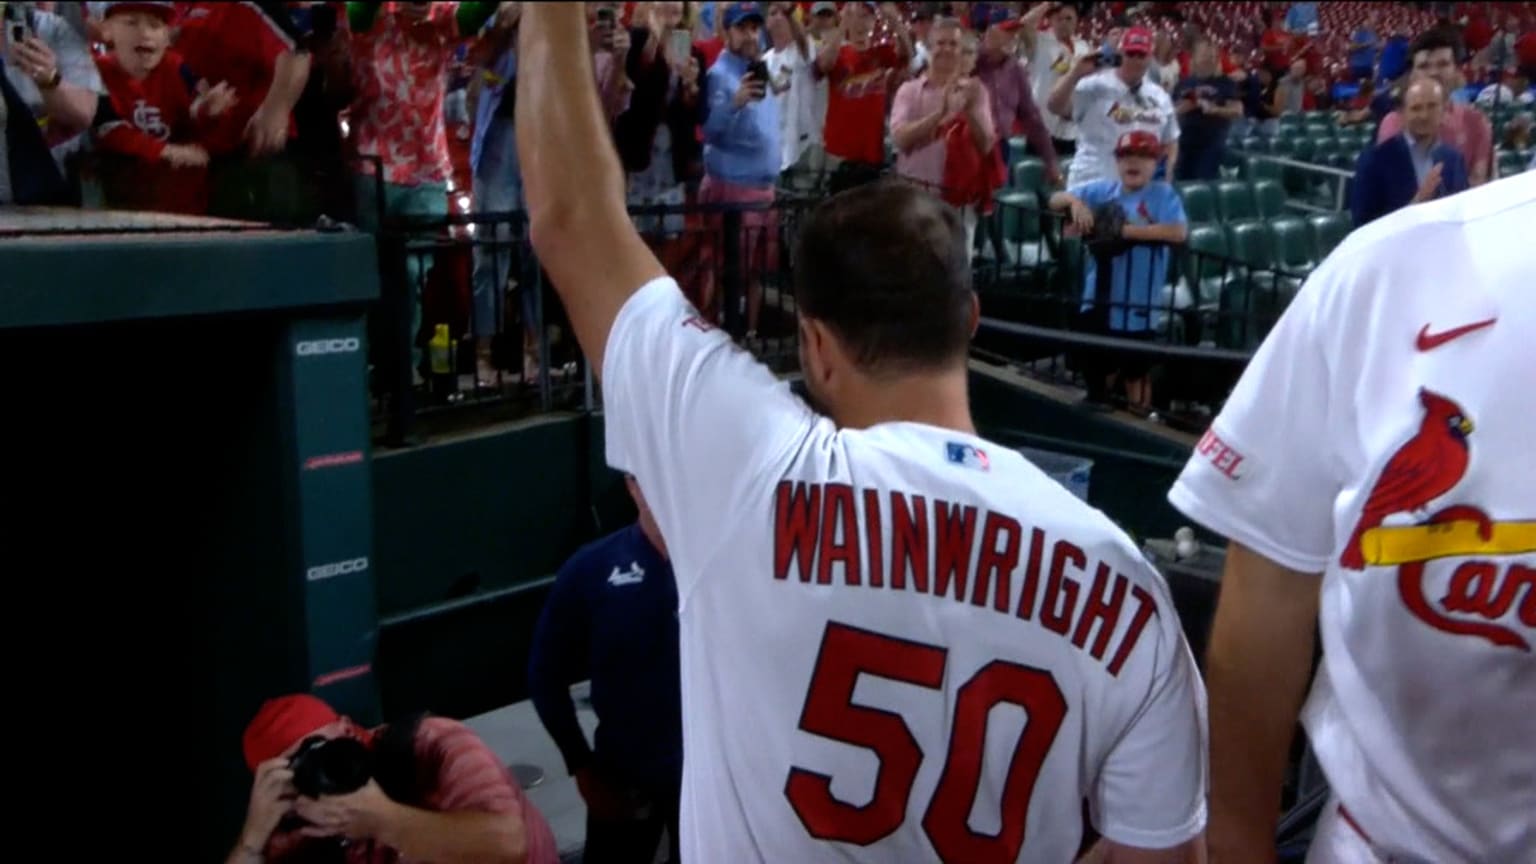 Video: Adam Wainwright discusses his 200th win